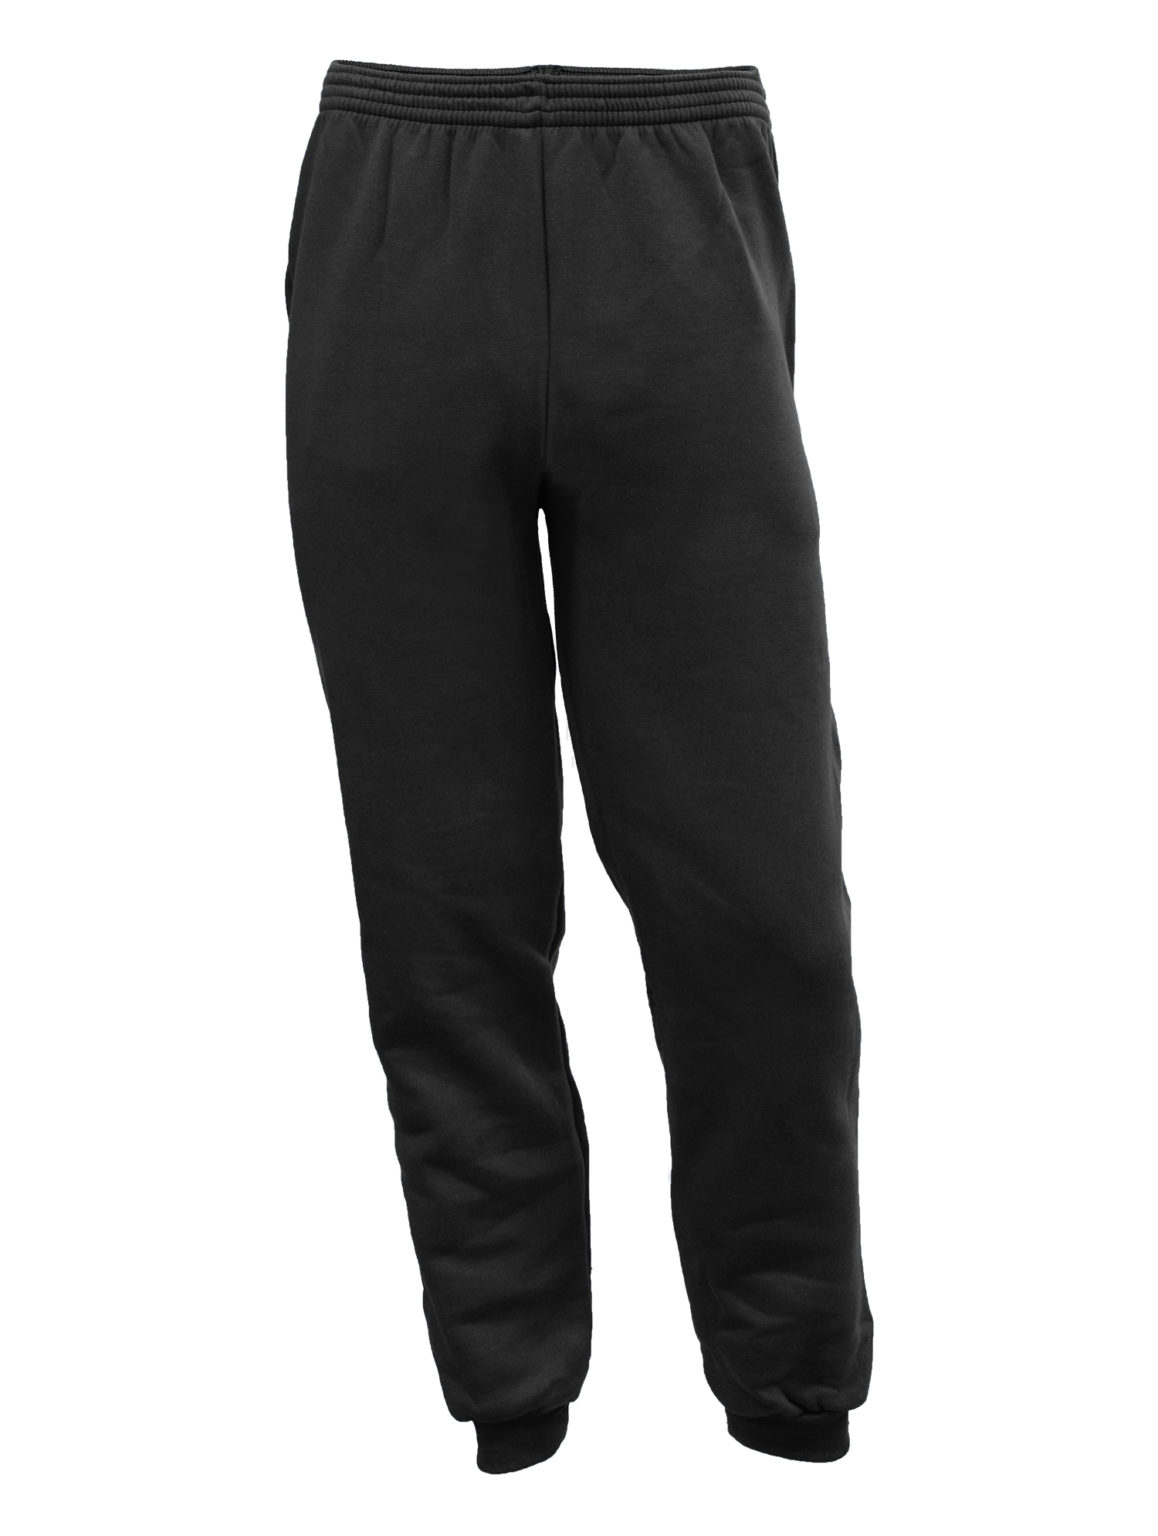 Black Tracksuit Bottoms (Cuff-leg 2603) - Quality Schoolwear